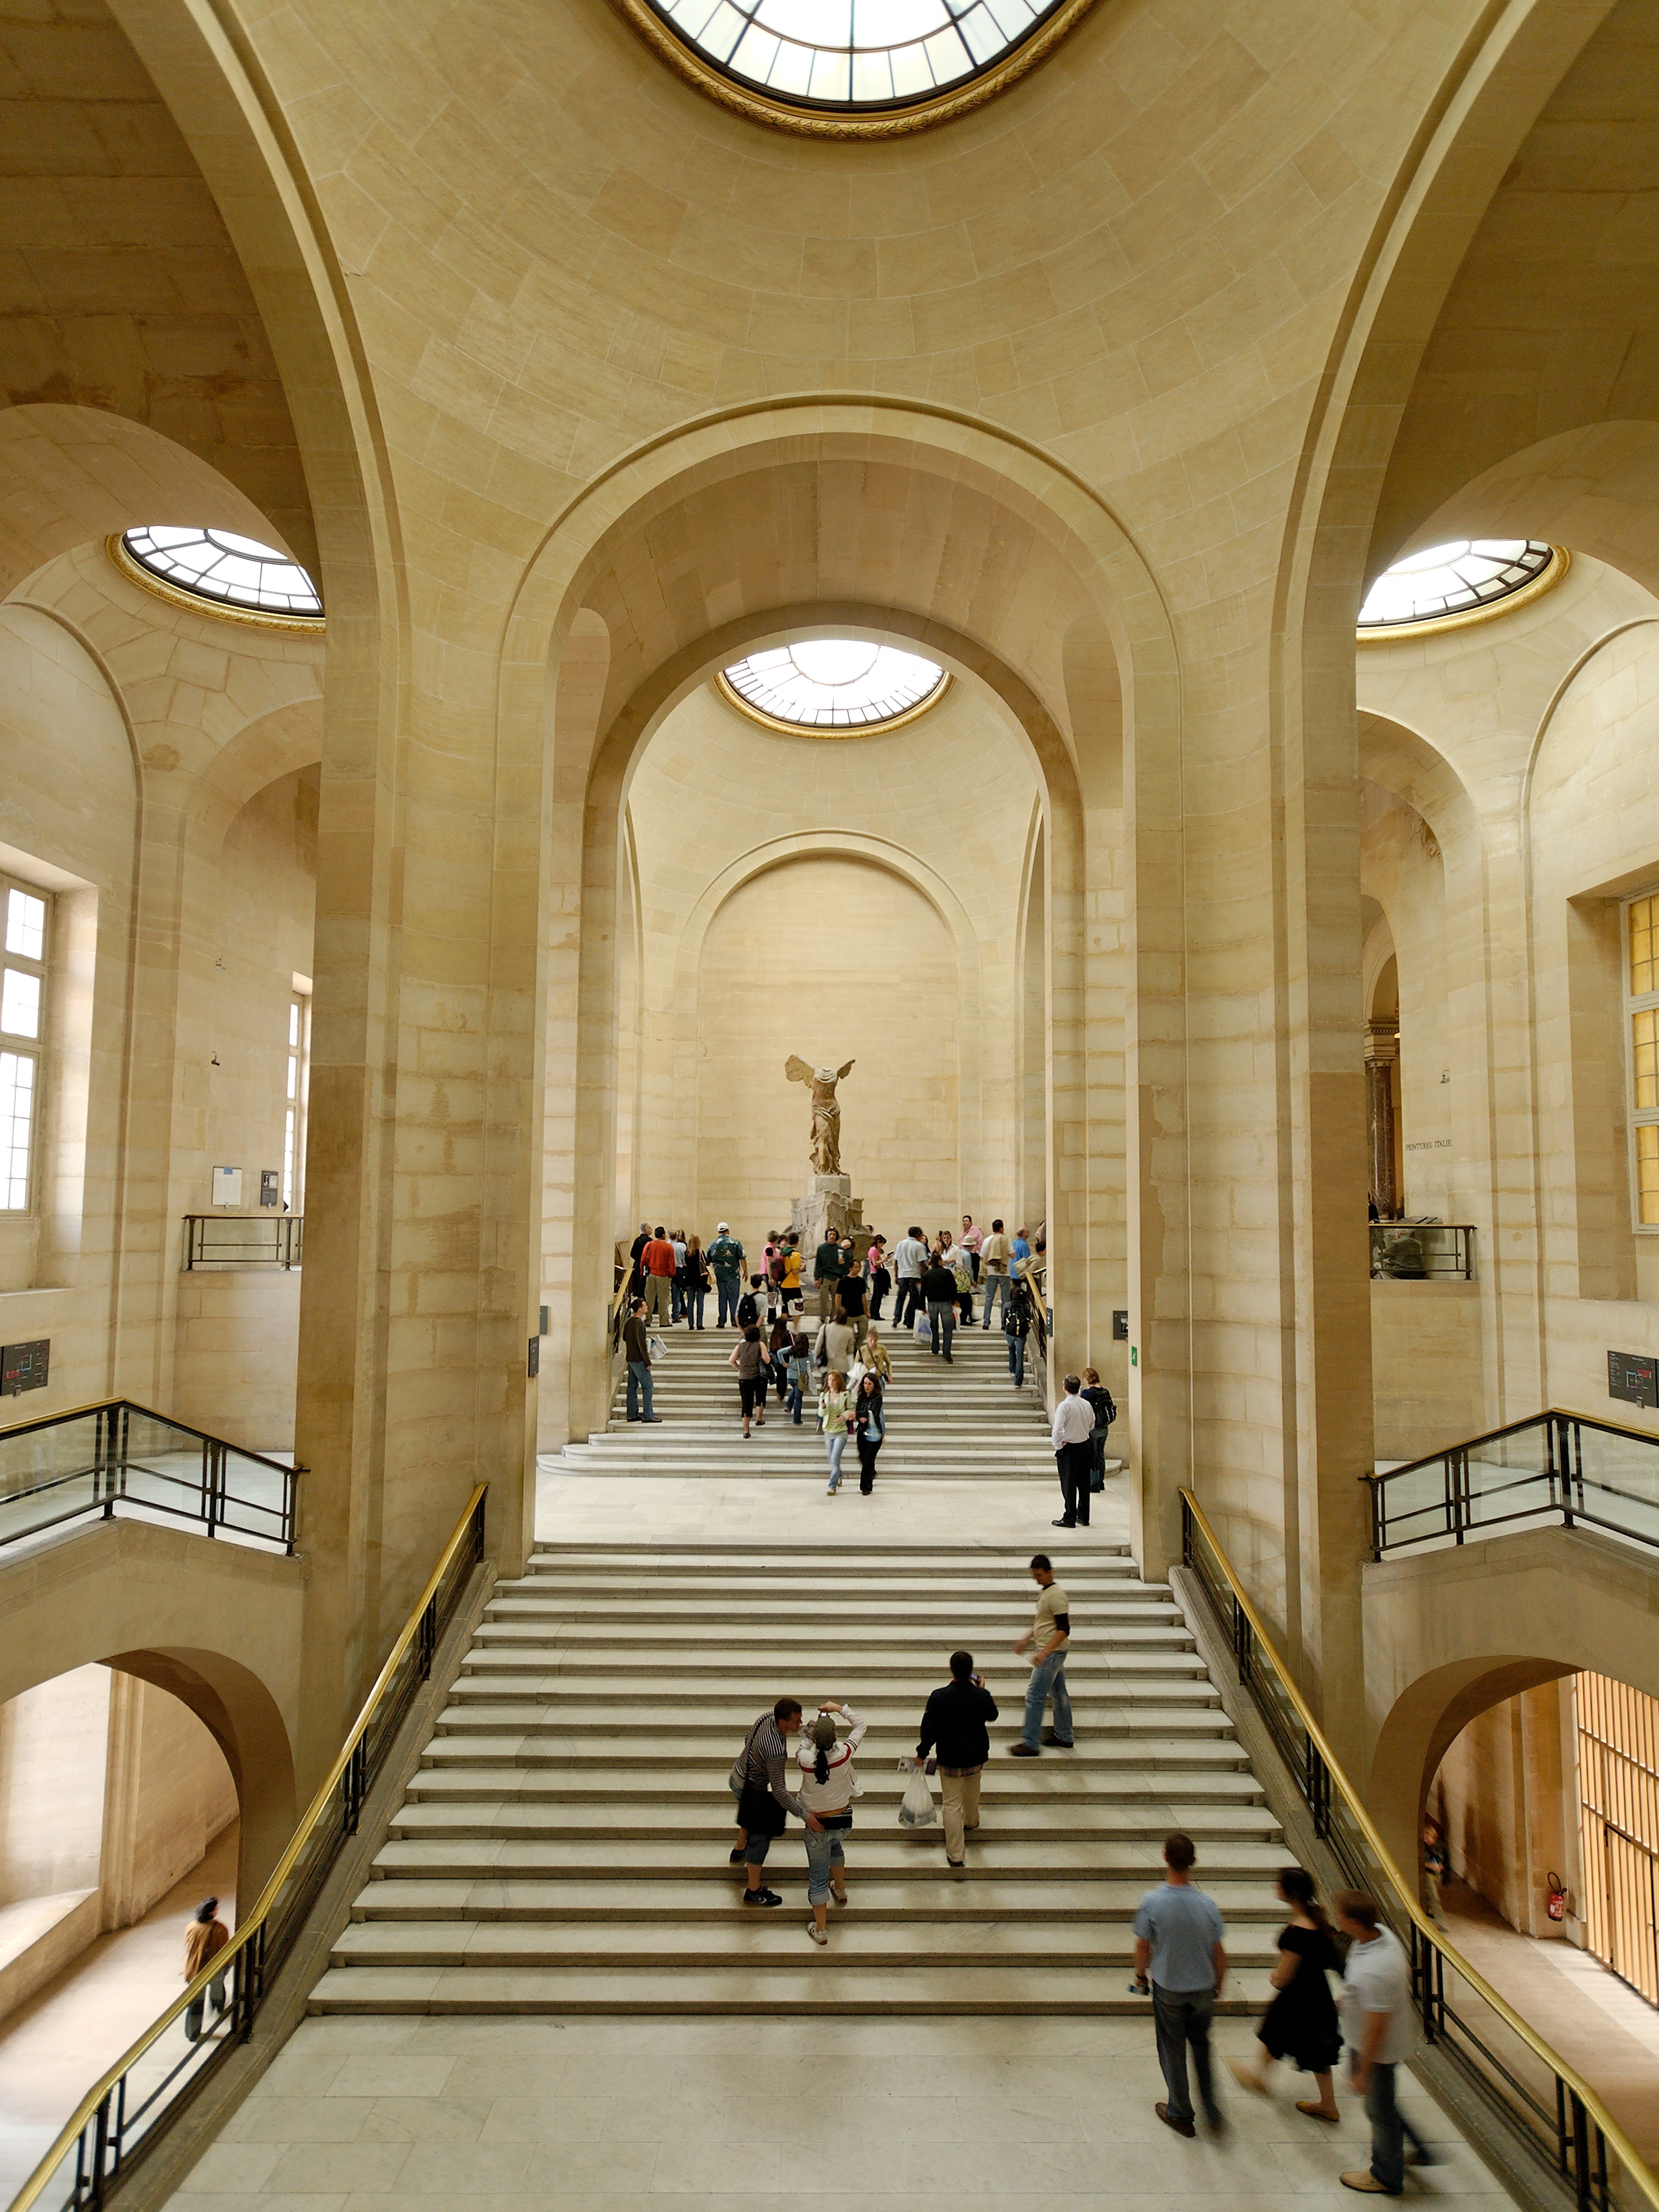 Daru staircase Louvre 2007 05 13